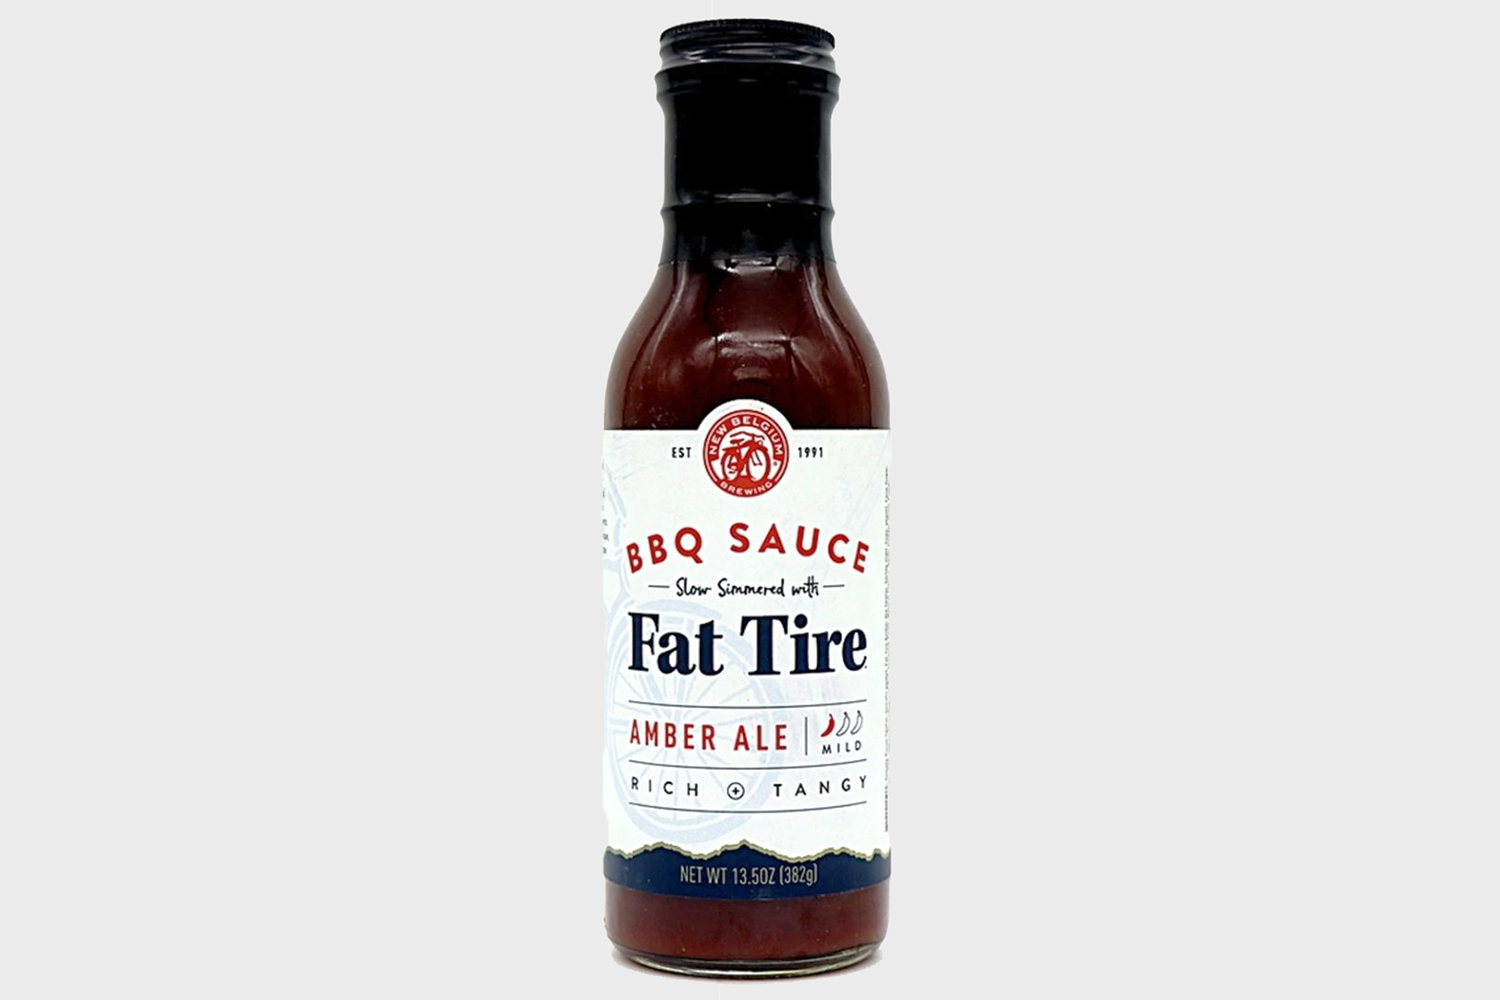 New Belgium Fat Tire BBQ Sauce